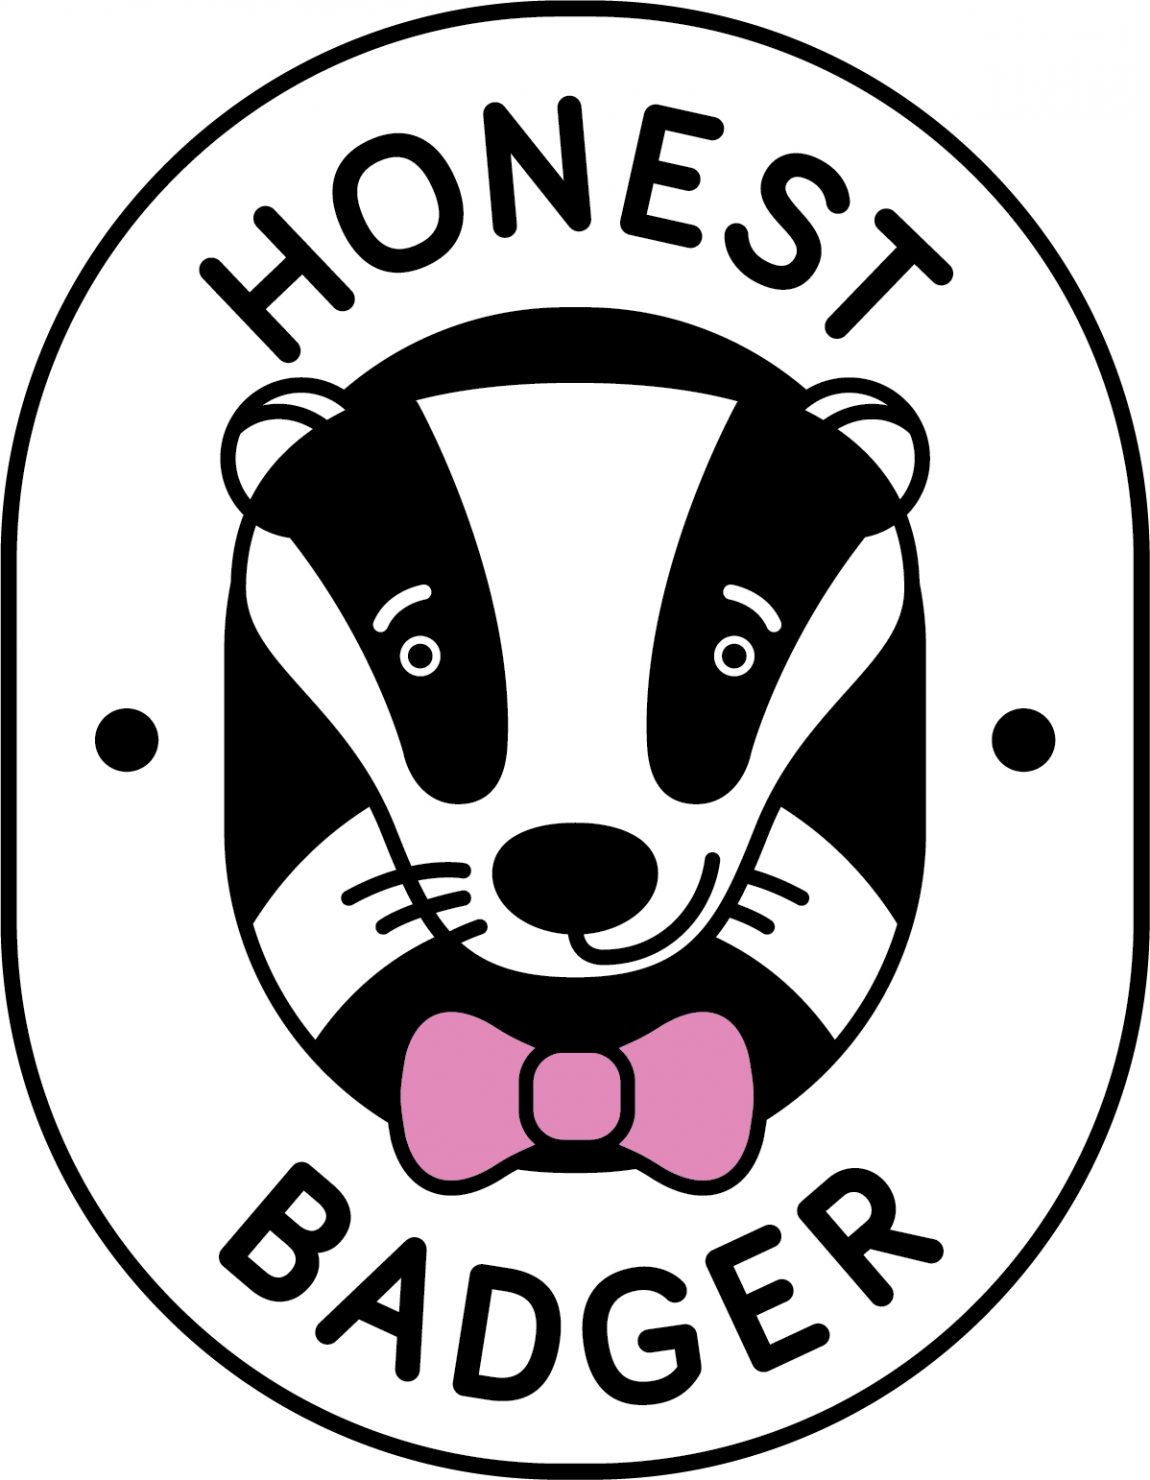 honest-badger-logo-solid.jpg